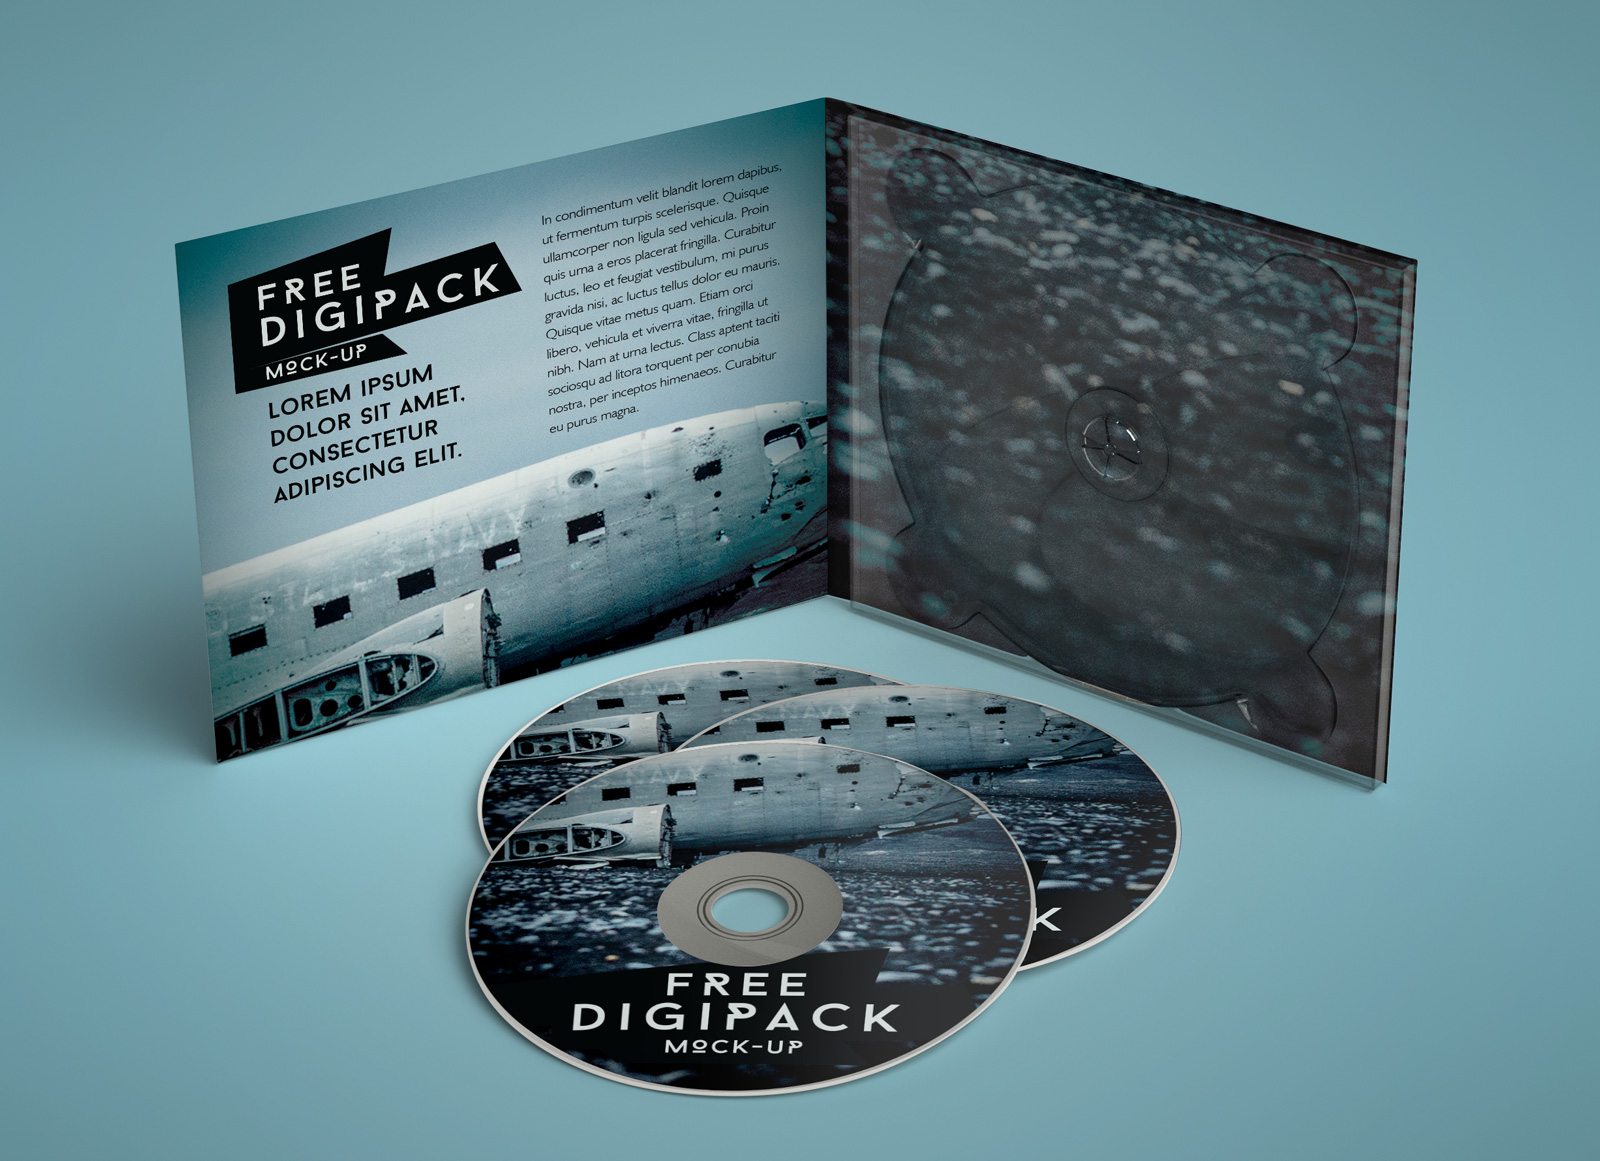 CD / DVD -Disc -Fallverpackung Mockup